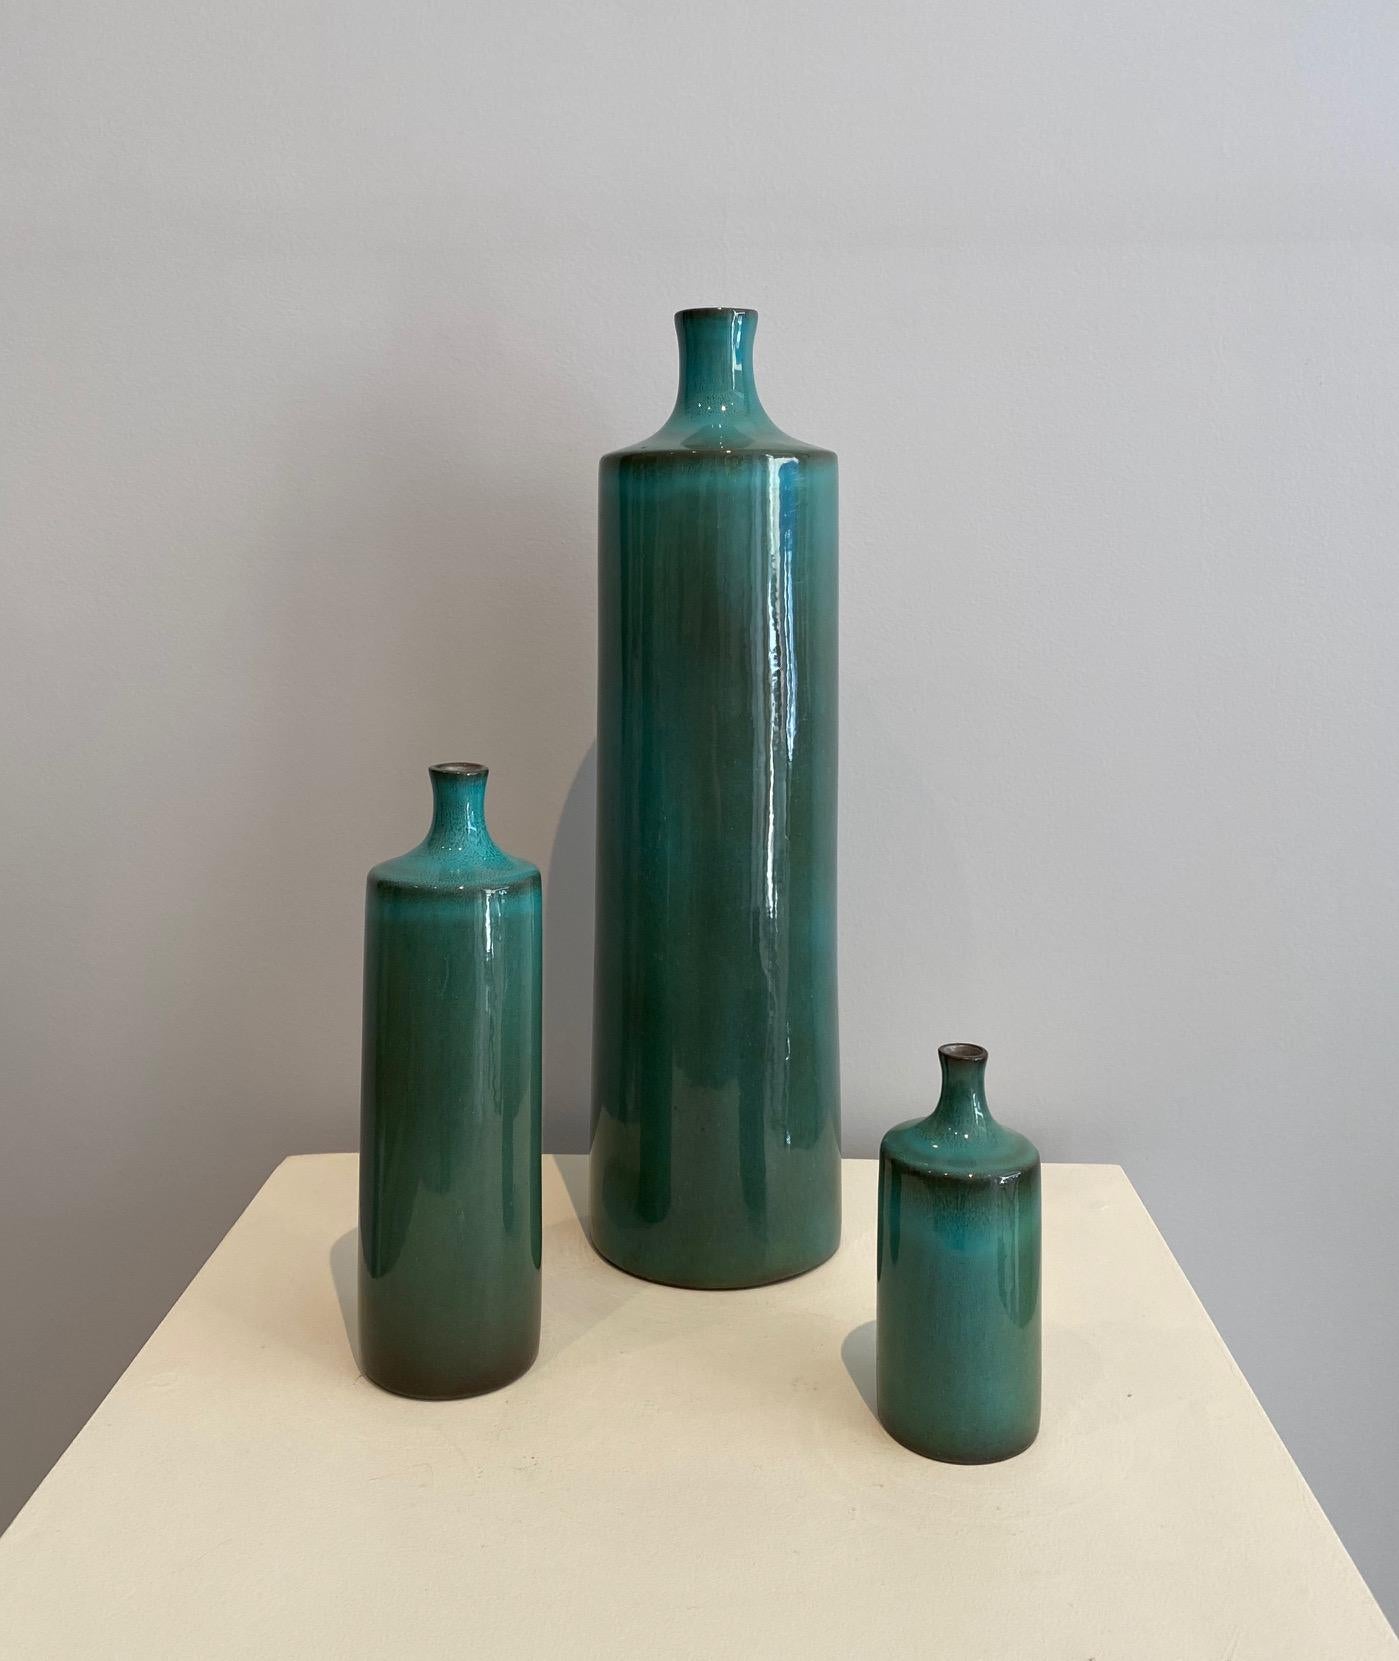 Shiny green set of 3 bottle vases by Jacques et Dani Ruelland, 1960s.
All signed on back

Dimensions:
H 40 cm
H 21 cm
H 11 cm.